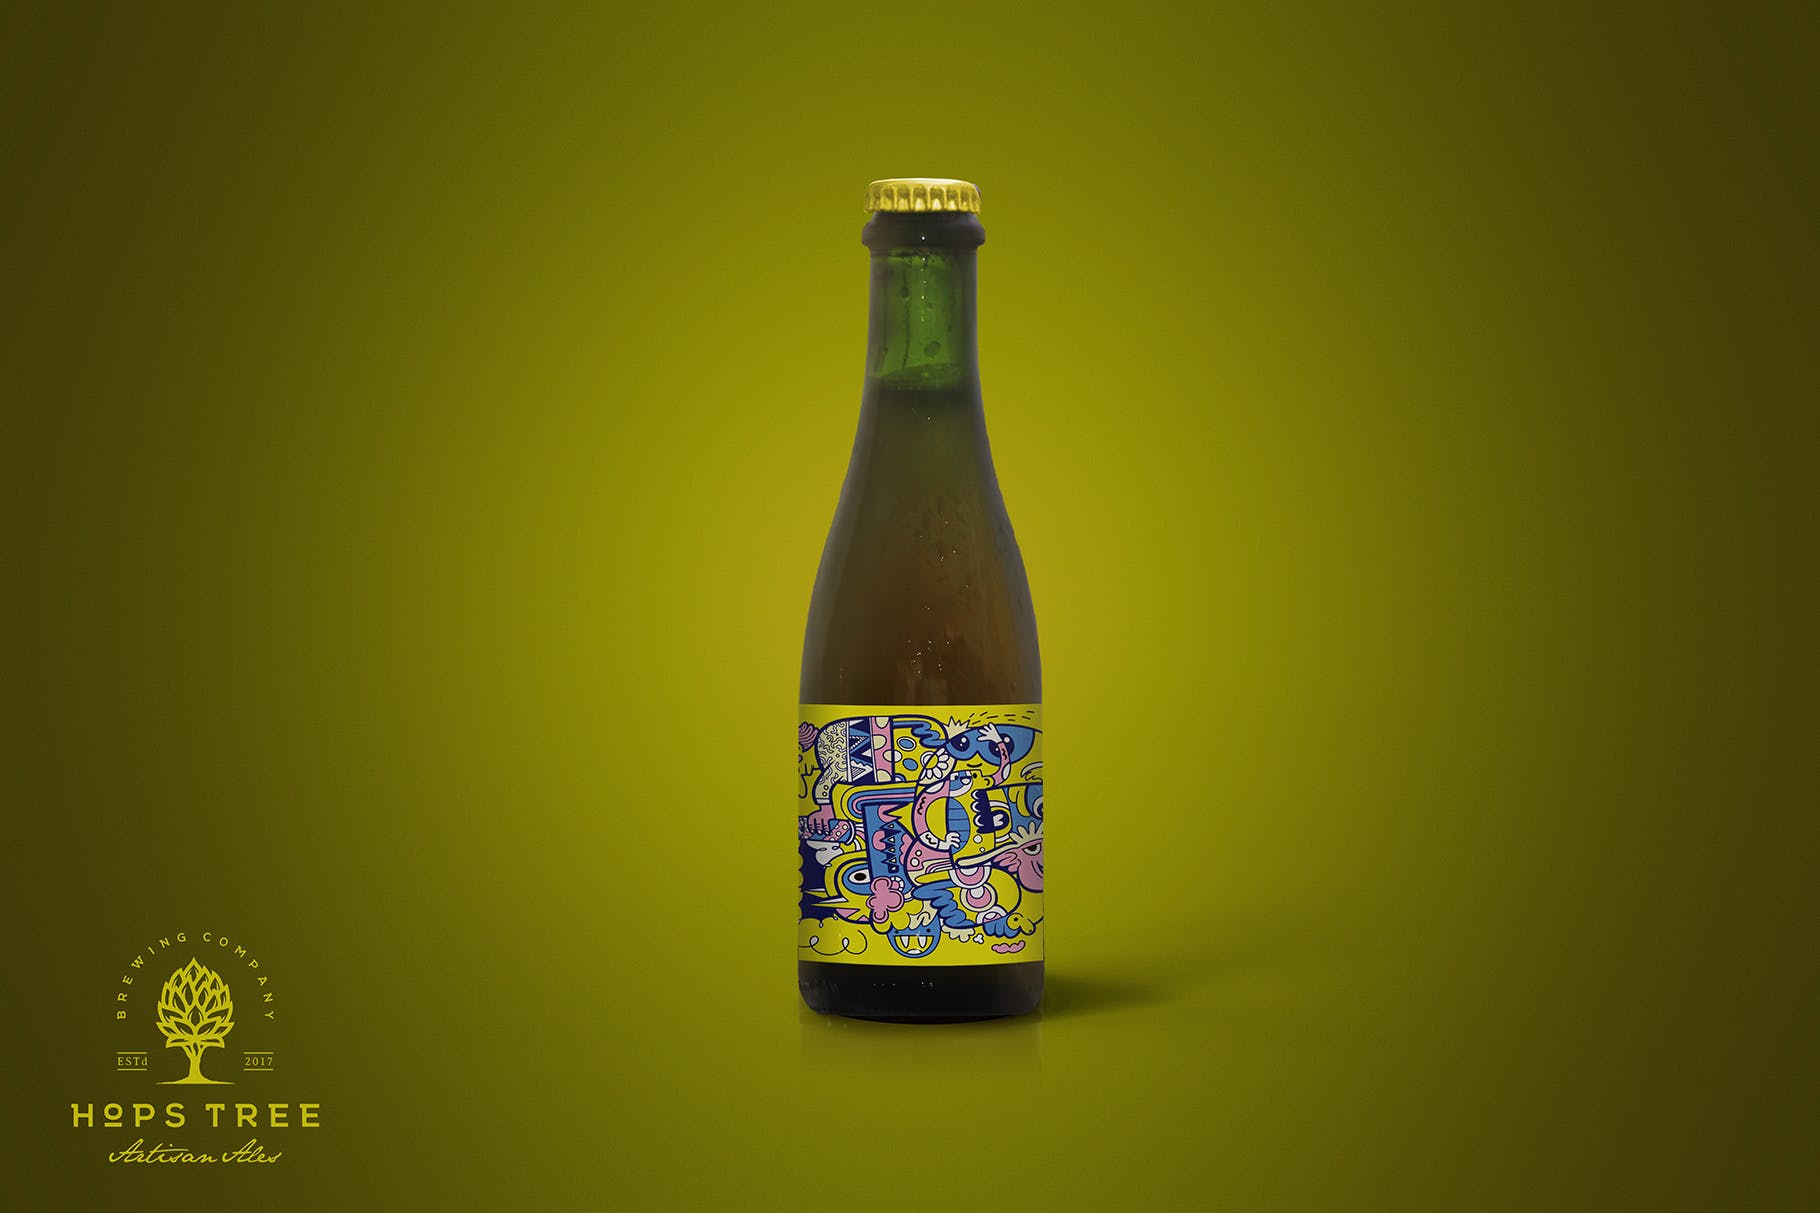 37cl棕褐色啤酒瓶外观设计图第一素材精选模板 Clean 37cl Tan Beer Mockup插图(1)